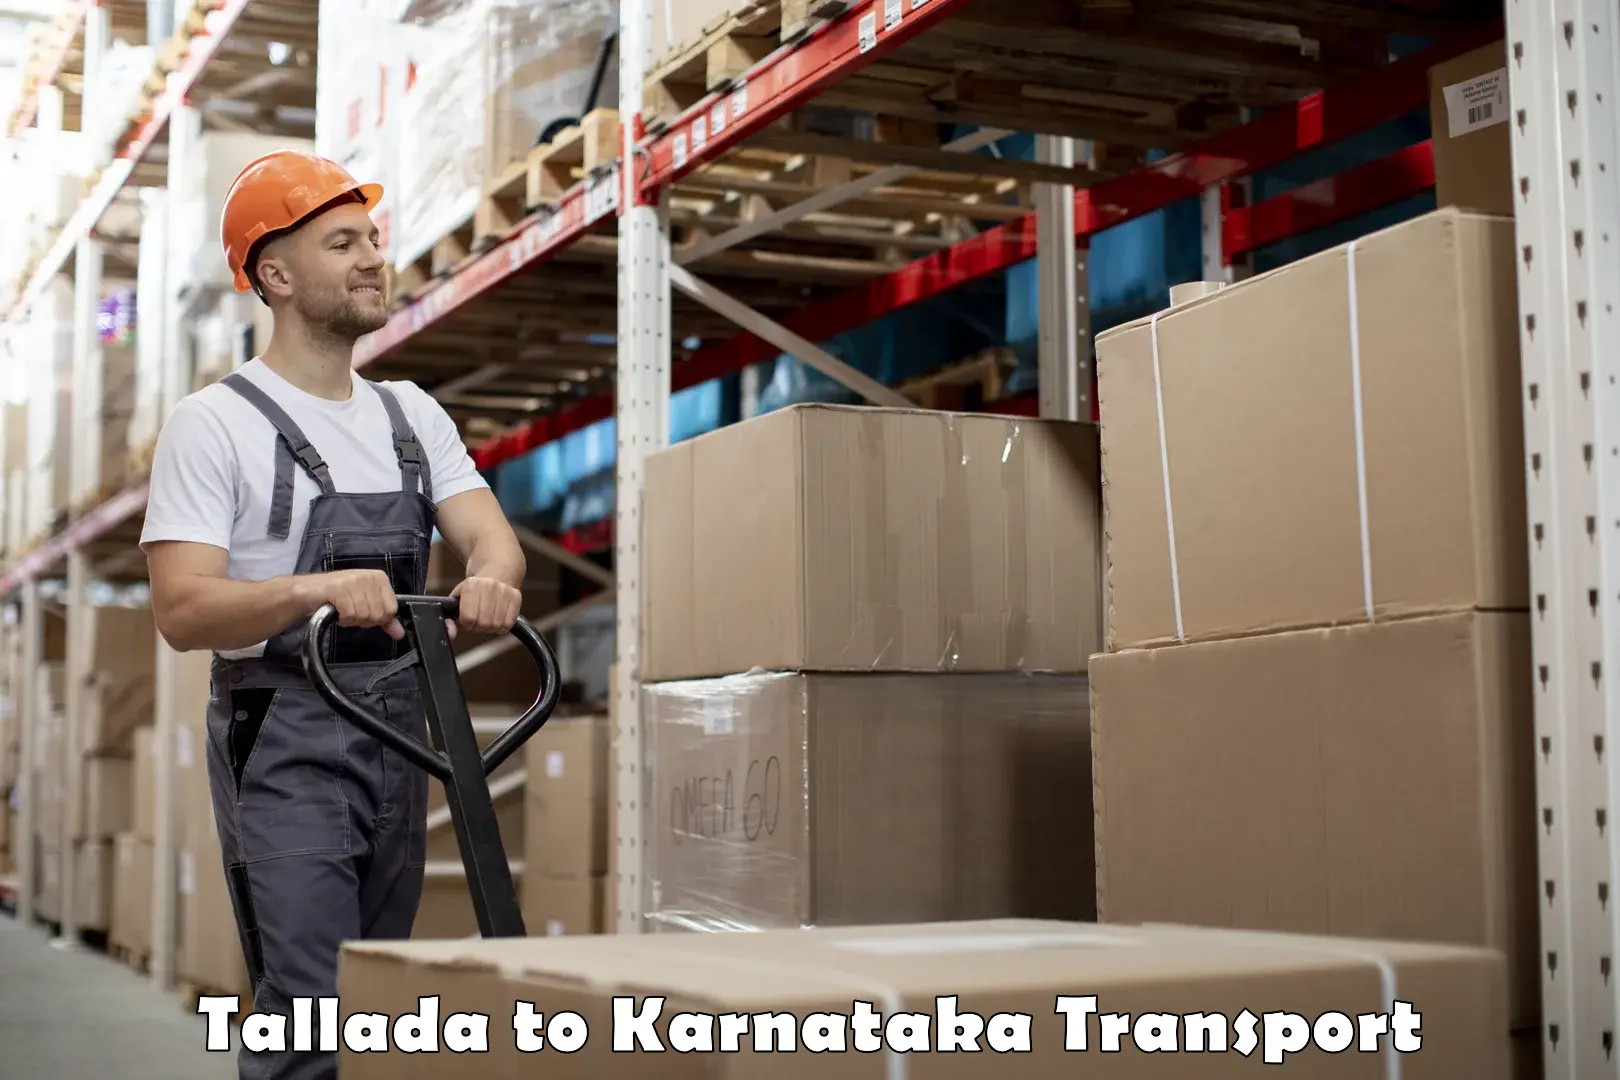 Furniture transport service Tallada to Mannaekhelli